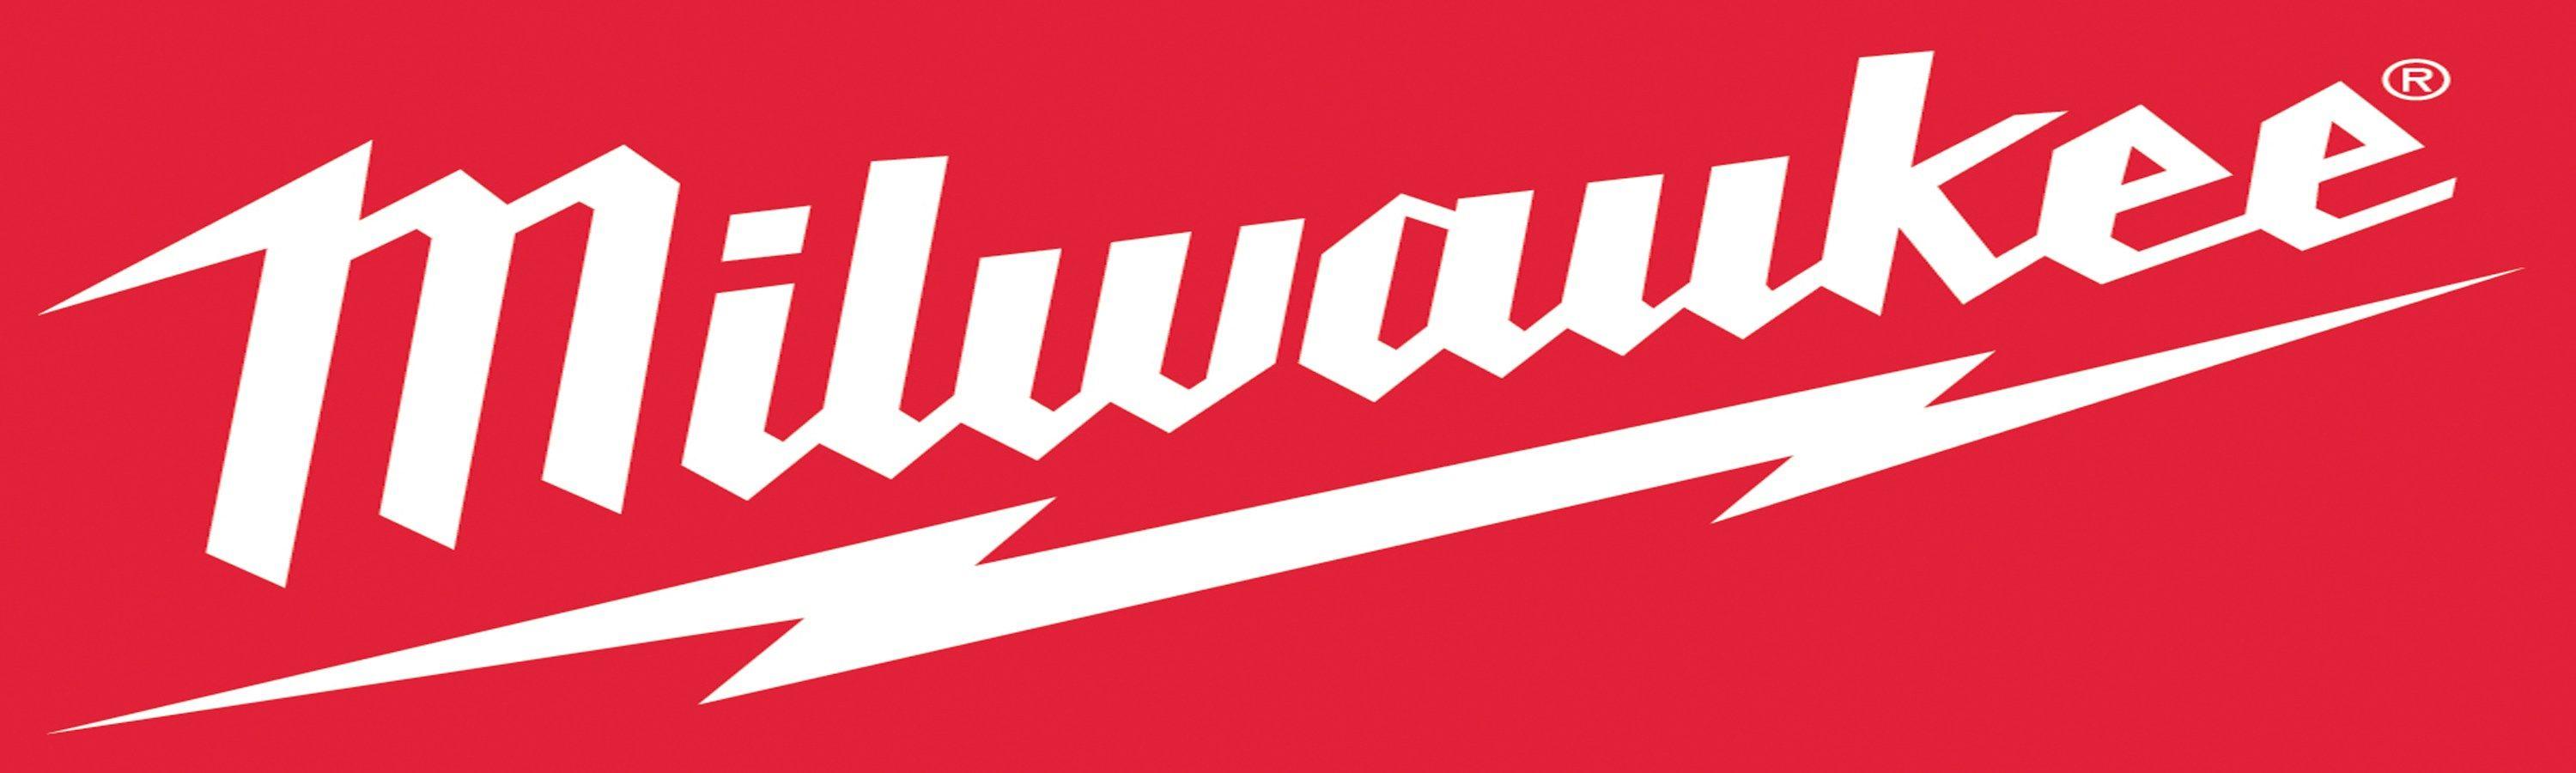 Red Banner Logo - Milwaukee Banner logo tools. Northwood's Hardware, Glen Arbor MI